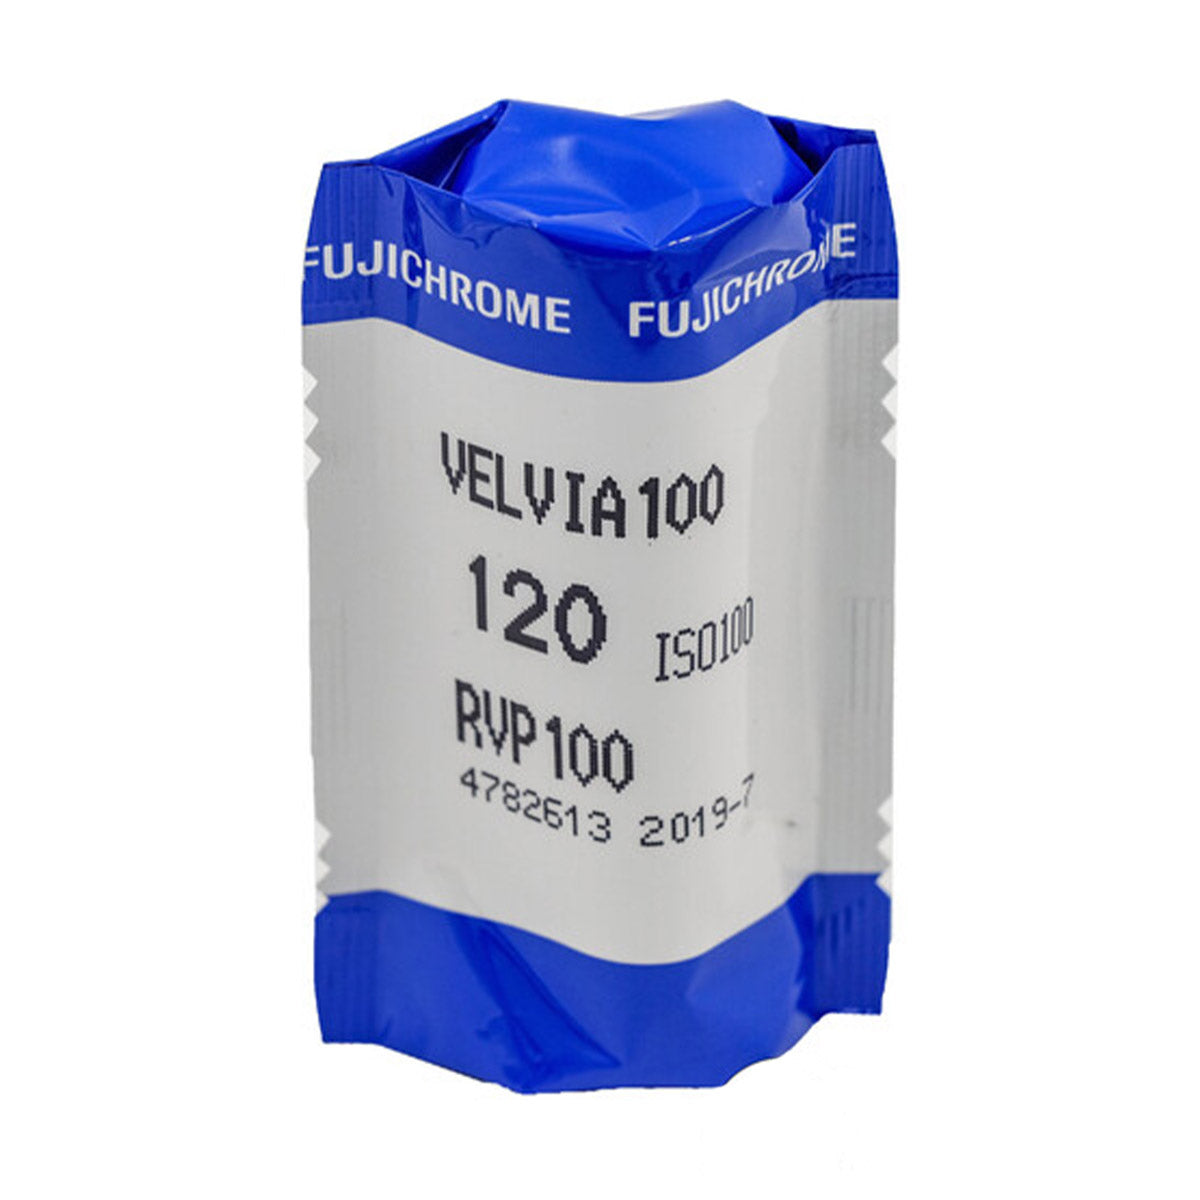 Fujichrome Velvia 100 120 Film (One Roll)